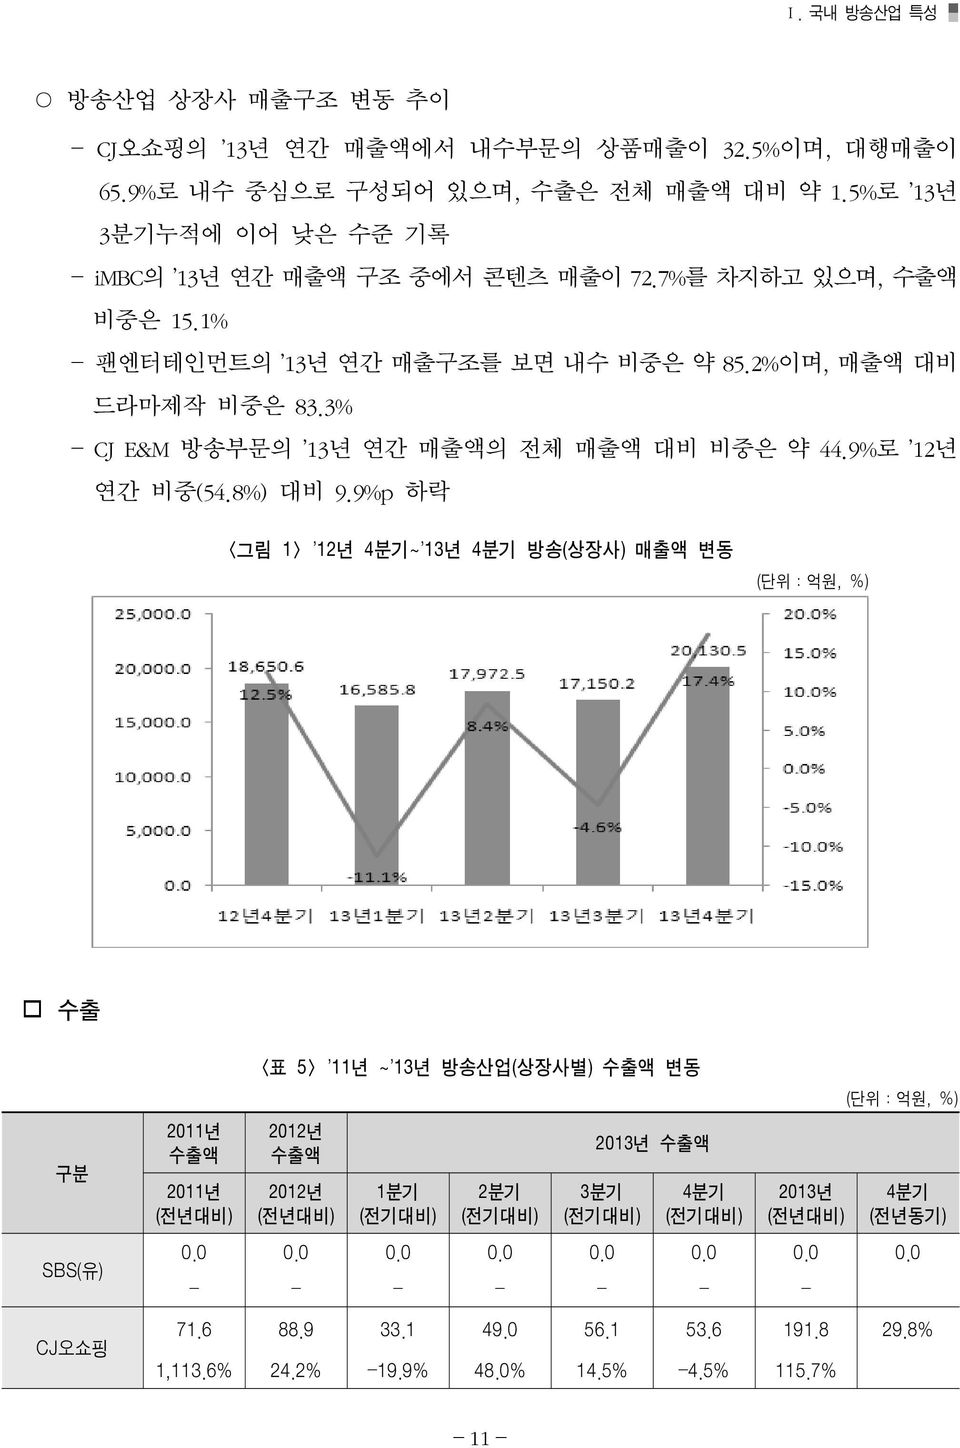 3% CJ E&M 방송부문의 13년 연간 매출액의 전체 매출액 대비 비중은 약 44.9%로 12년 연간 비중(54.8%) 대비 9.